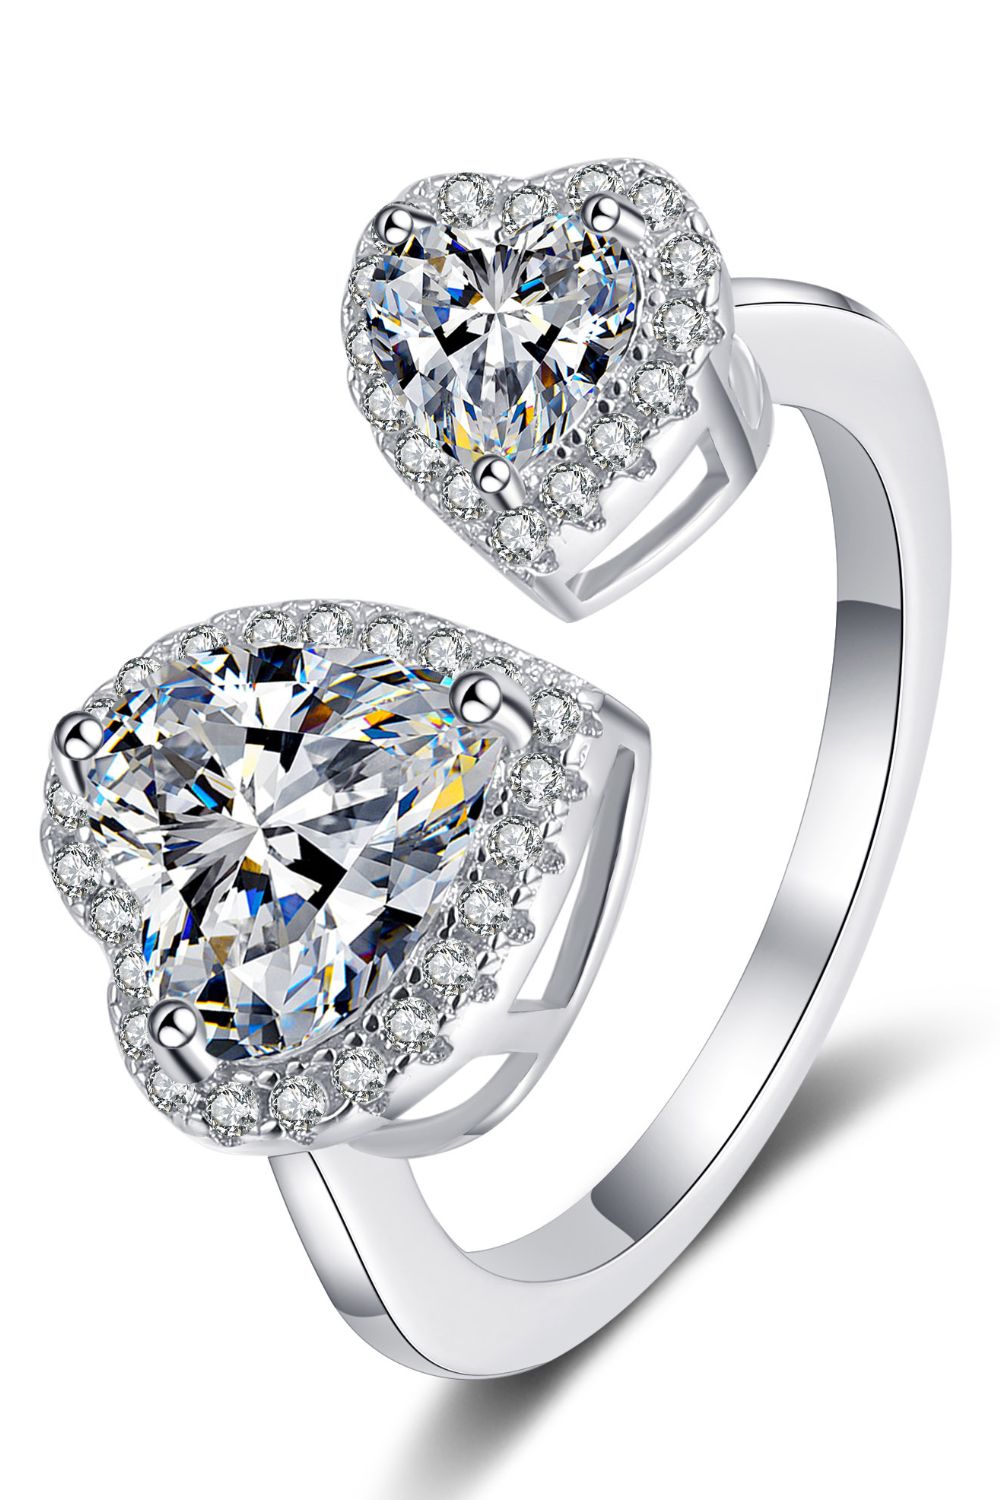 Double Heart Ring Adjustable Heart-Shape Moissanite Open center Ring Women's Fine Jewelry